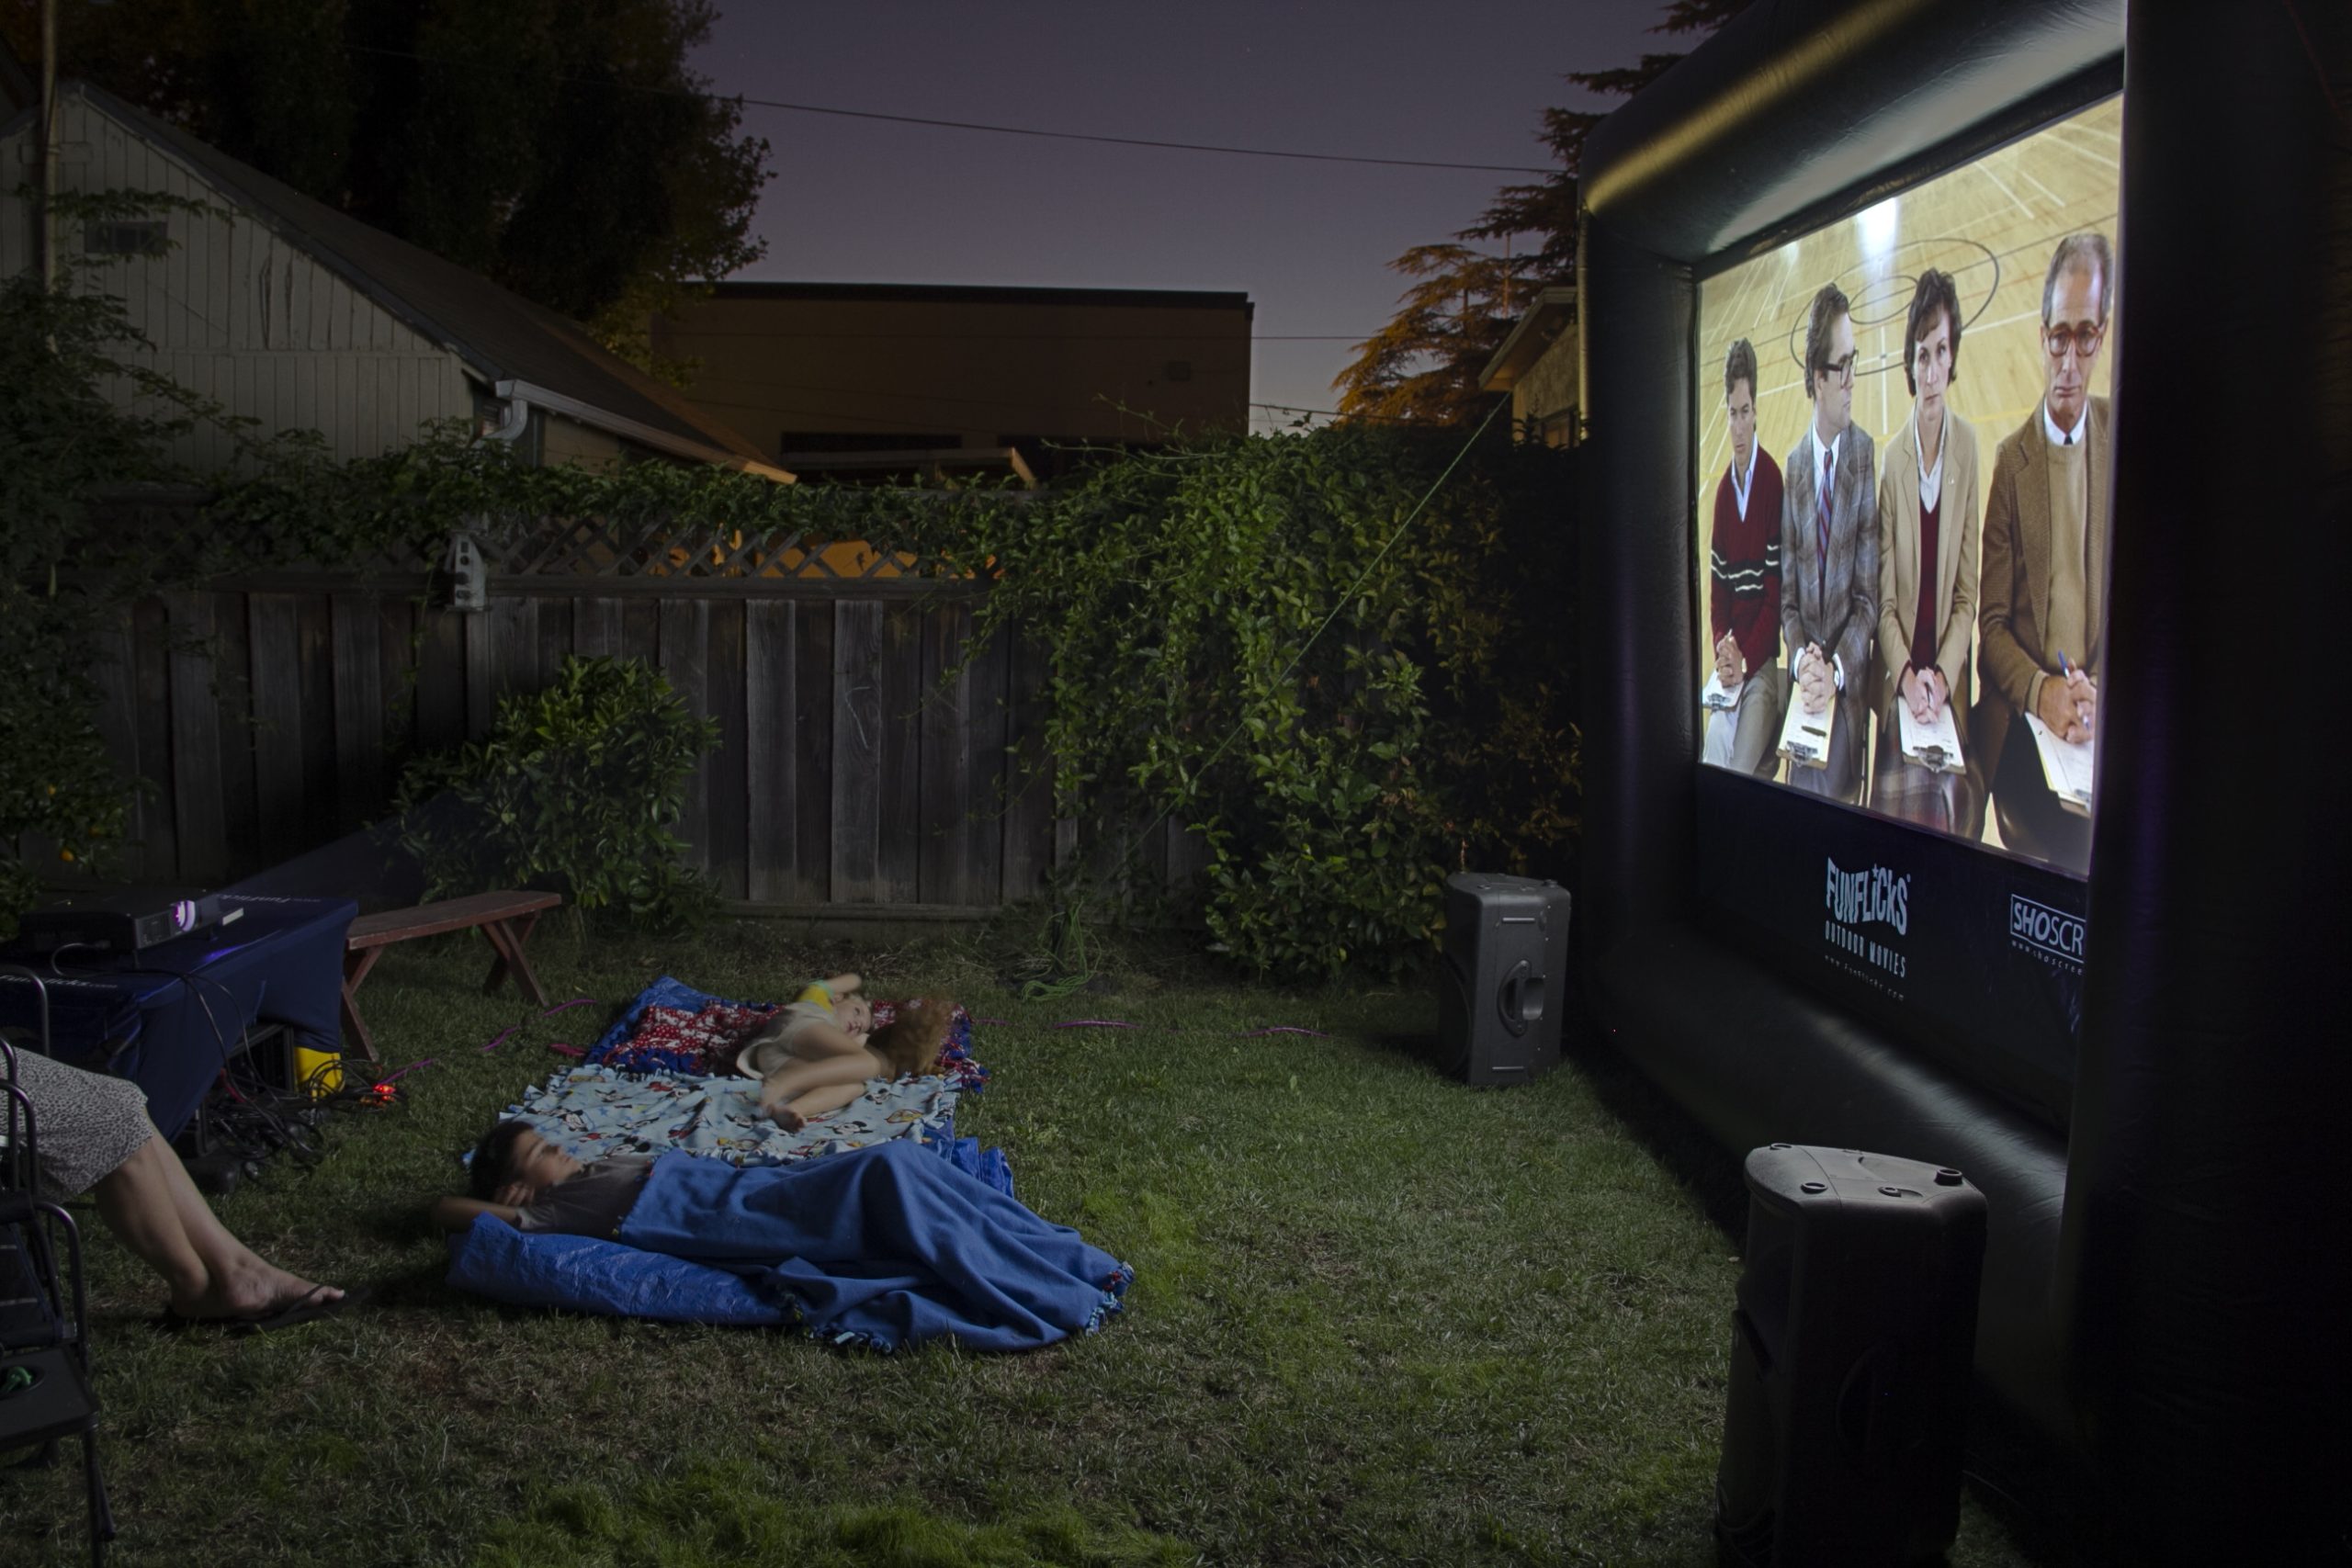 Backyard outdoor movie party